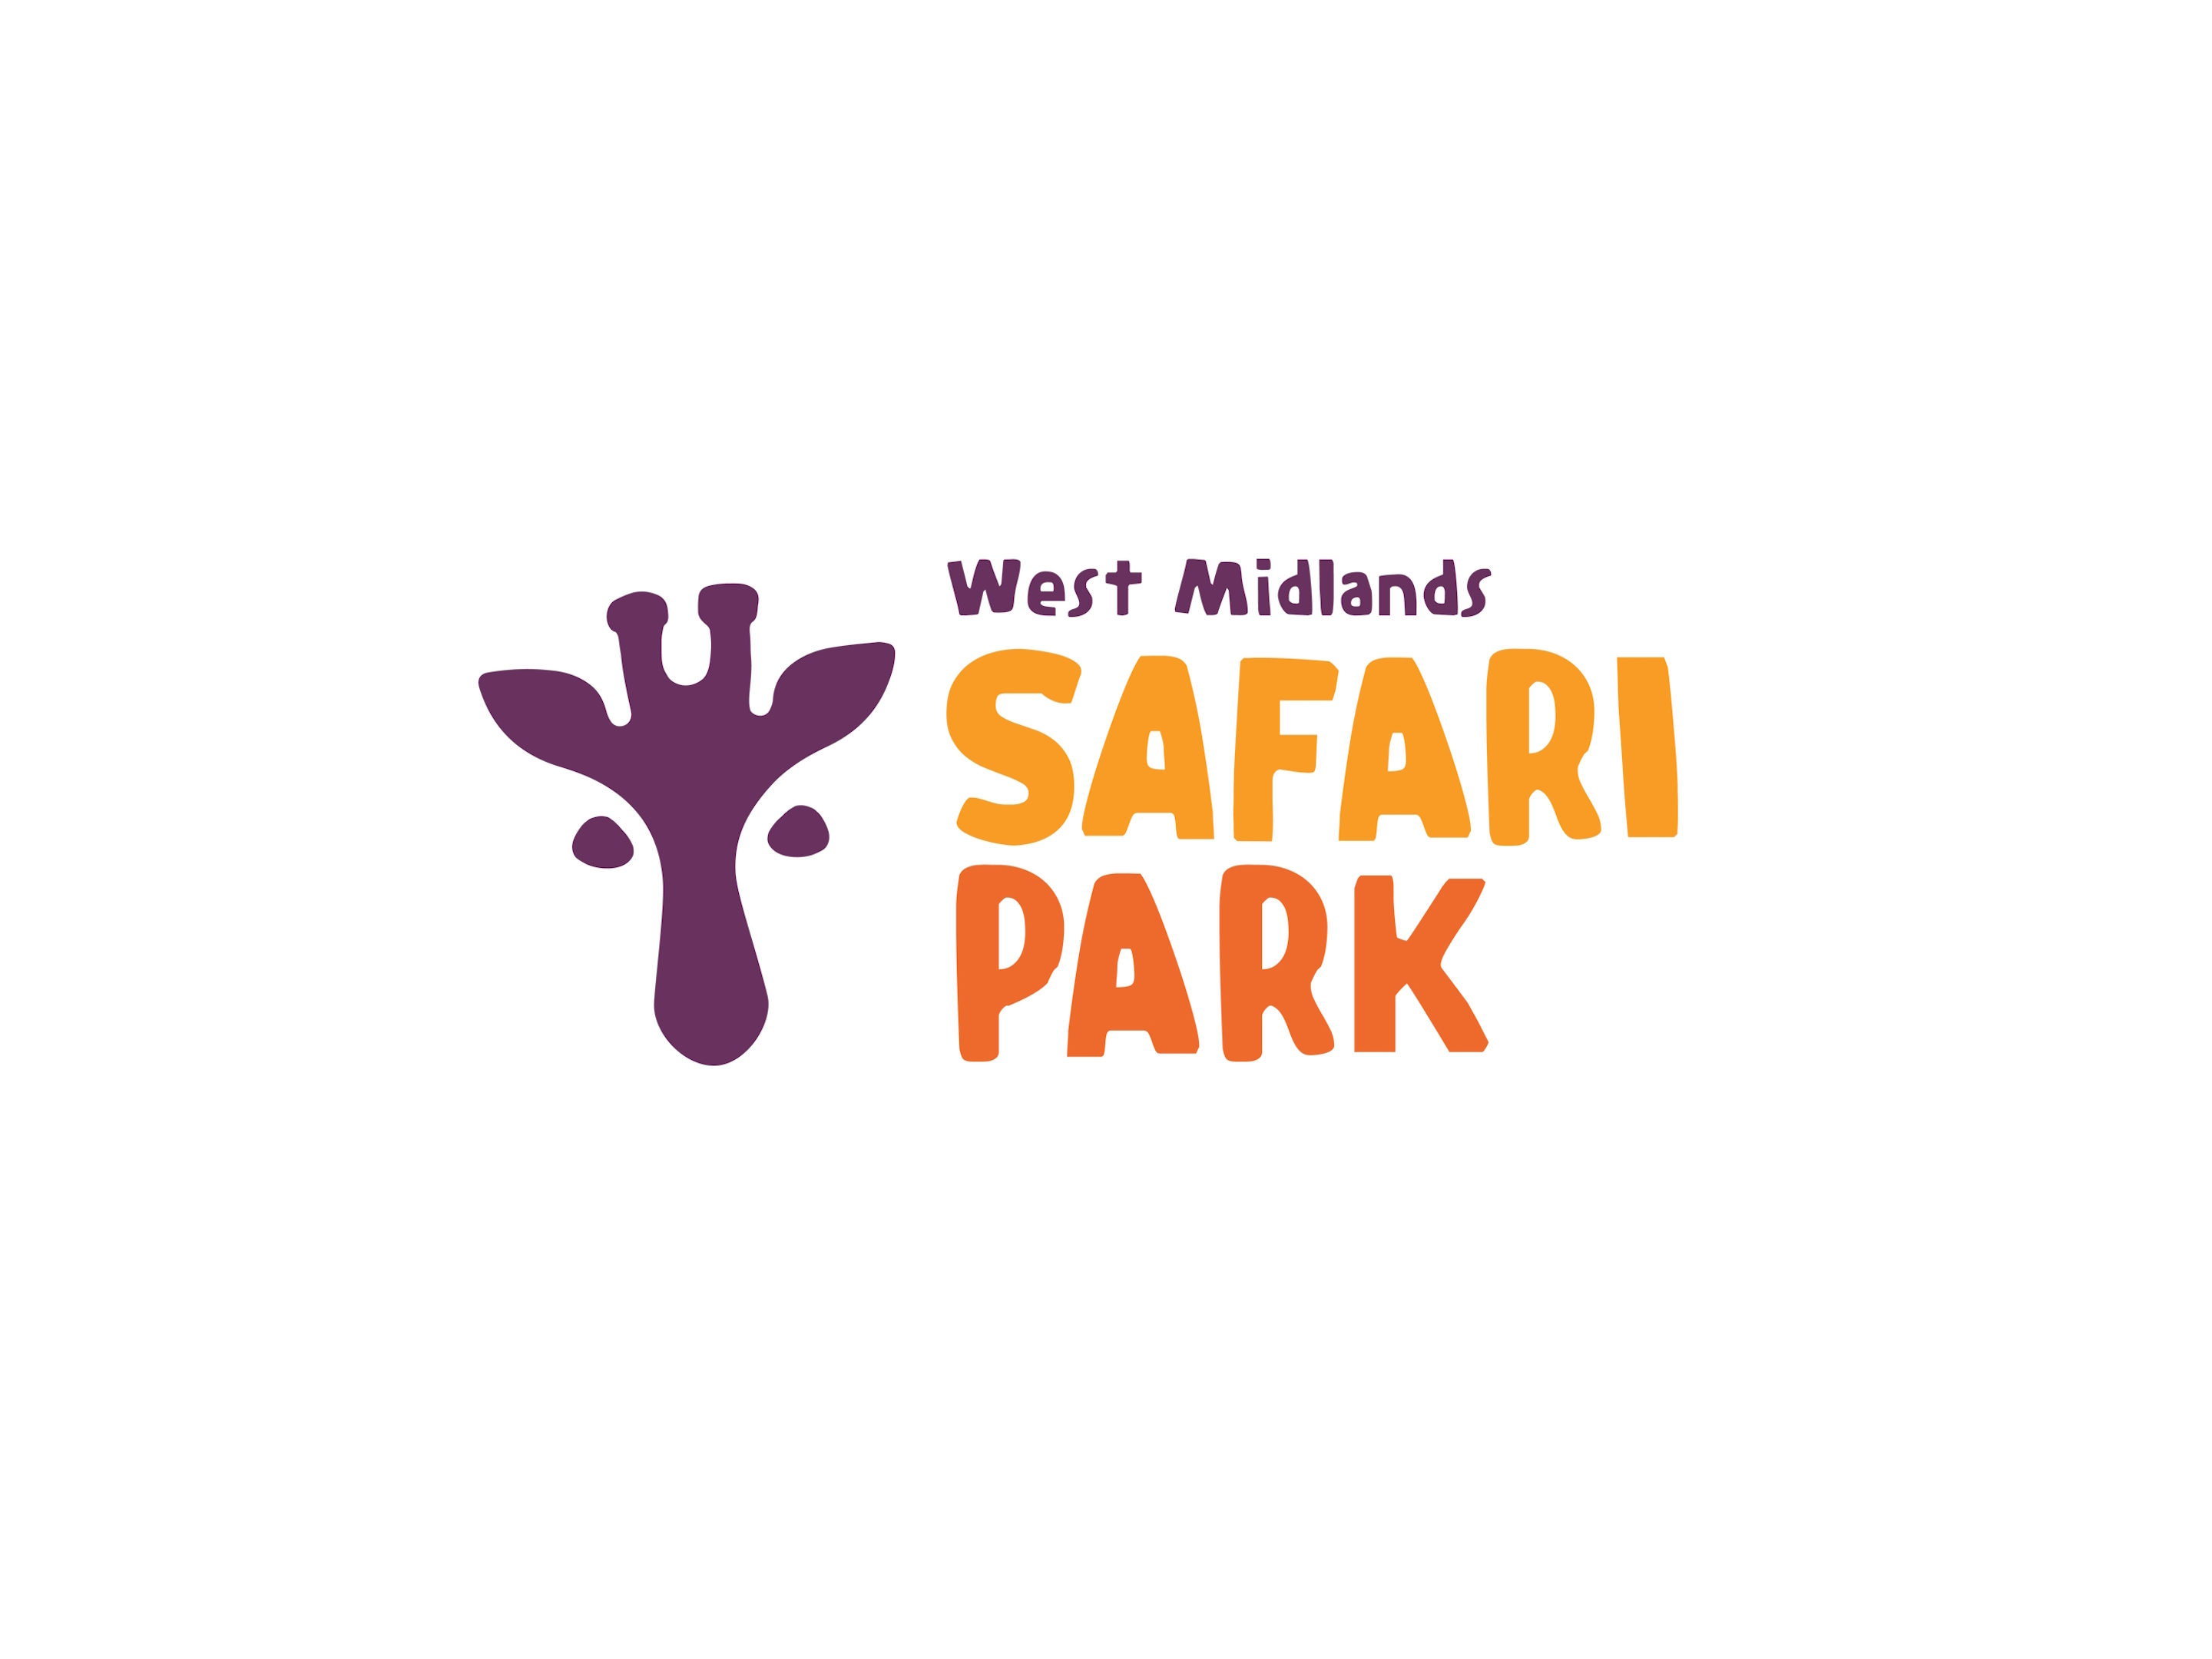 West Midlands Safari Park logo